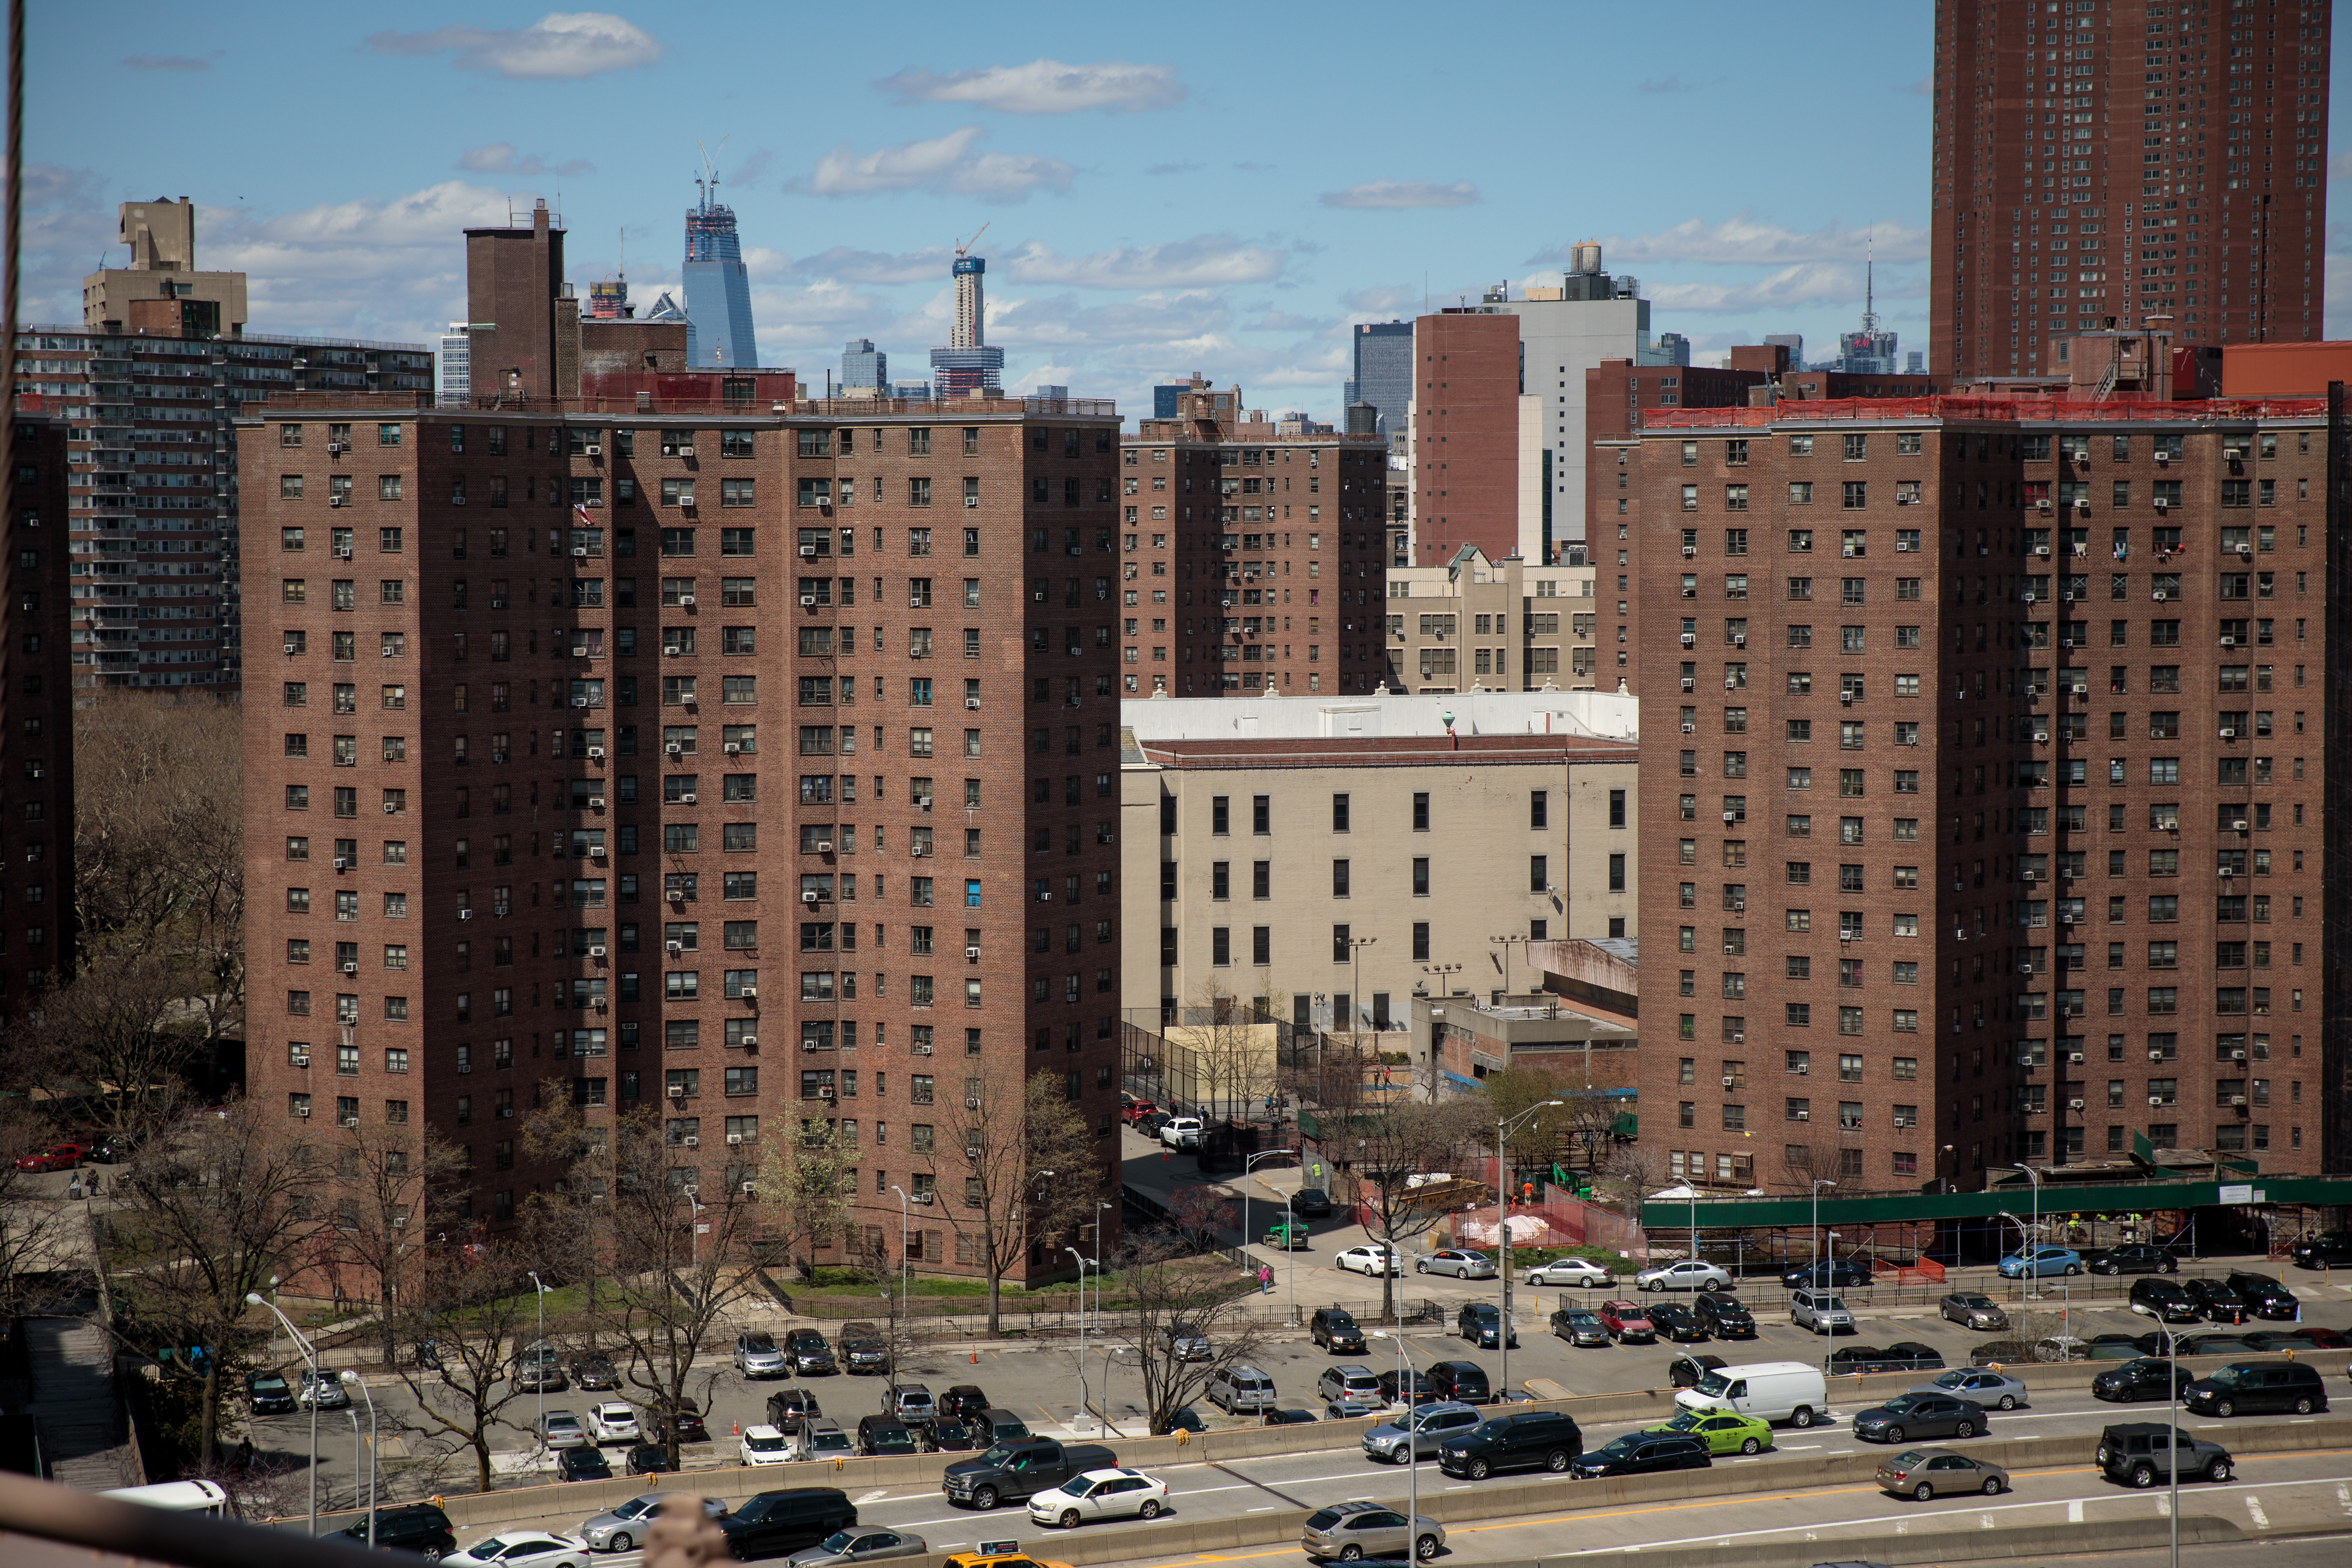 Brown public housing units in Manhattan, New York City.